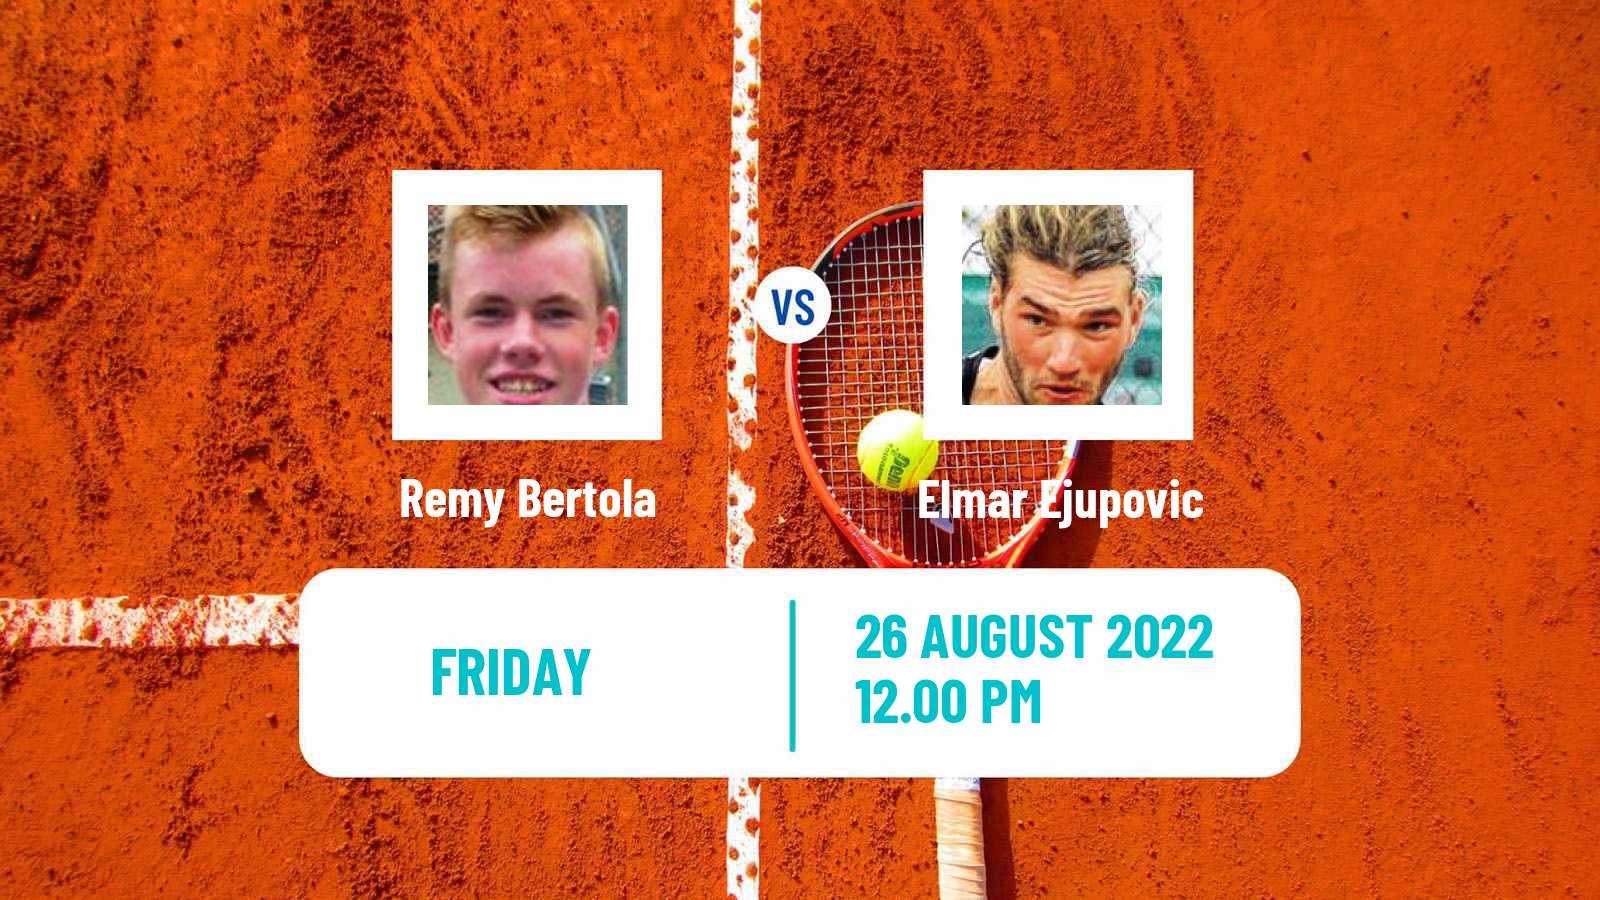 Tennis ITF Tournaments Remy Bertola - Elmar Ejupovic